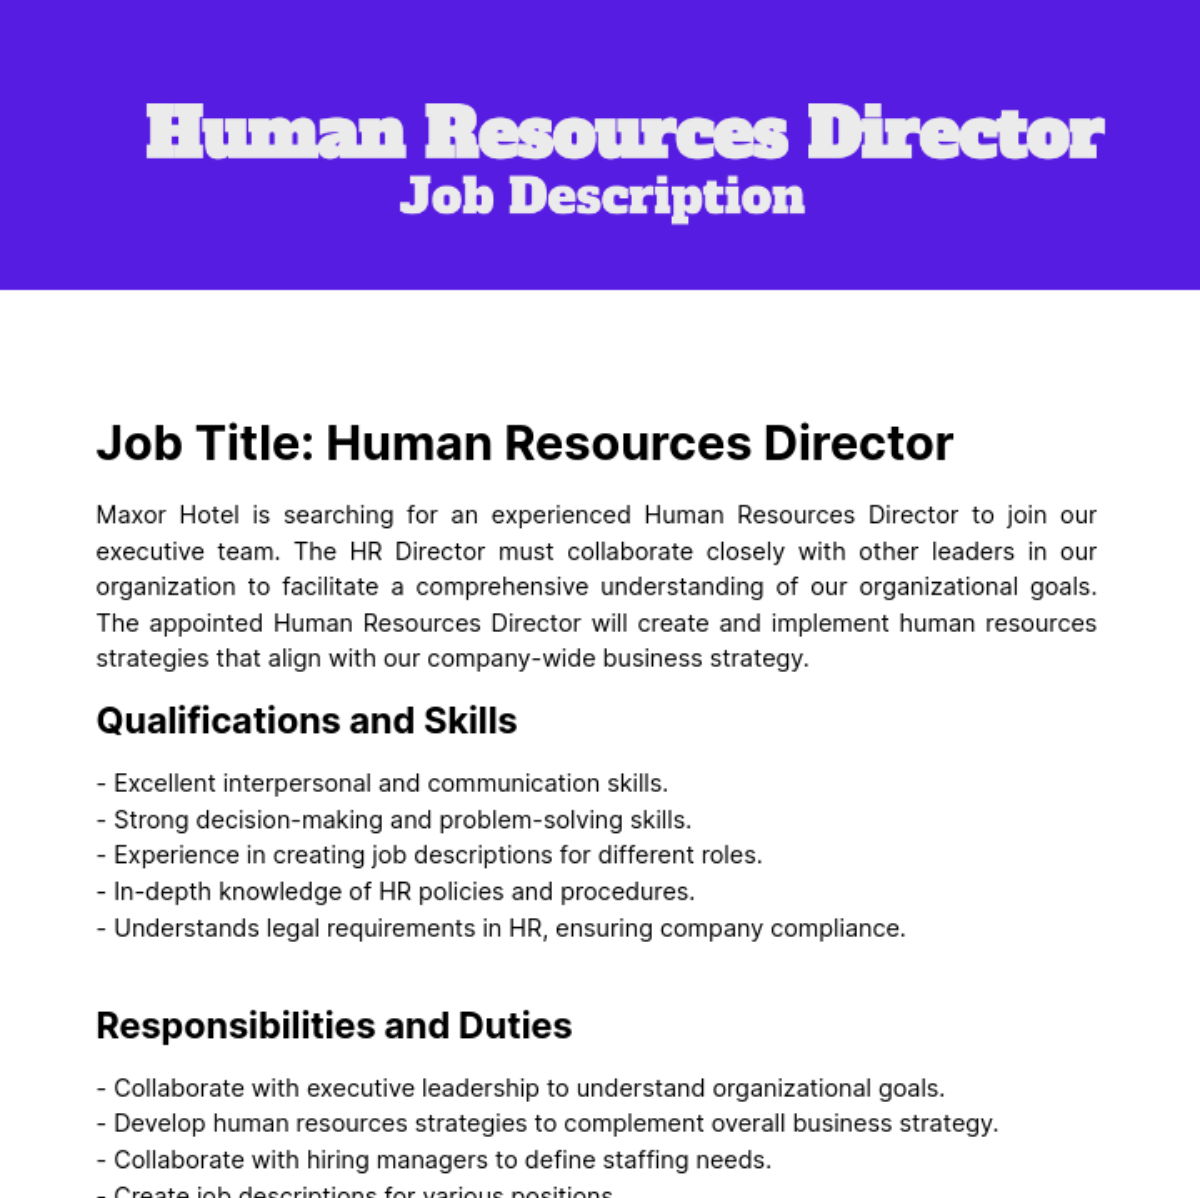 Human Resources Director Job Description Template